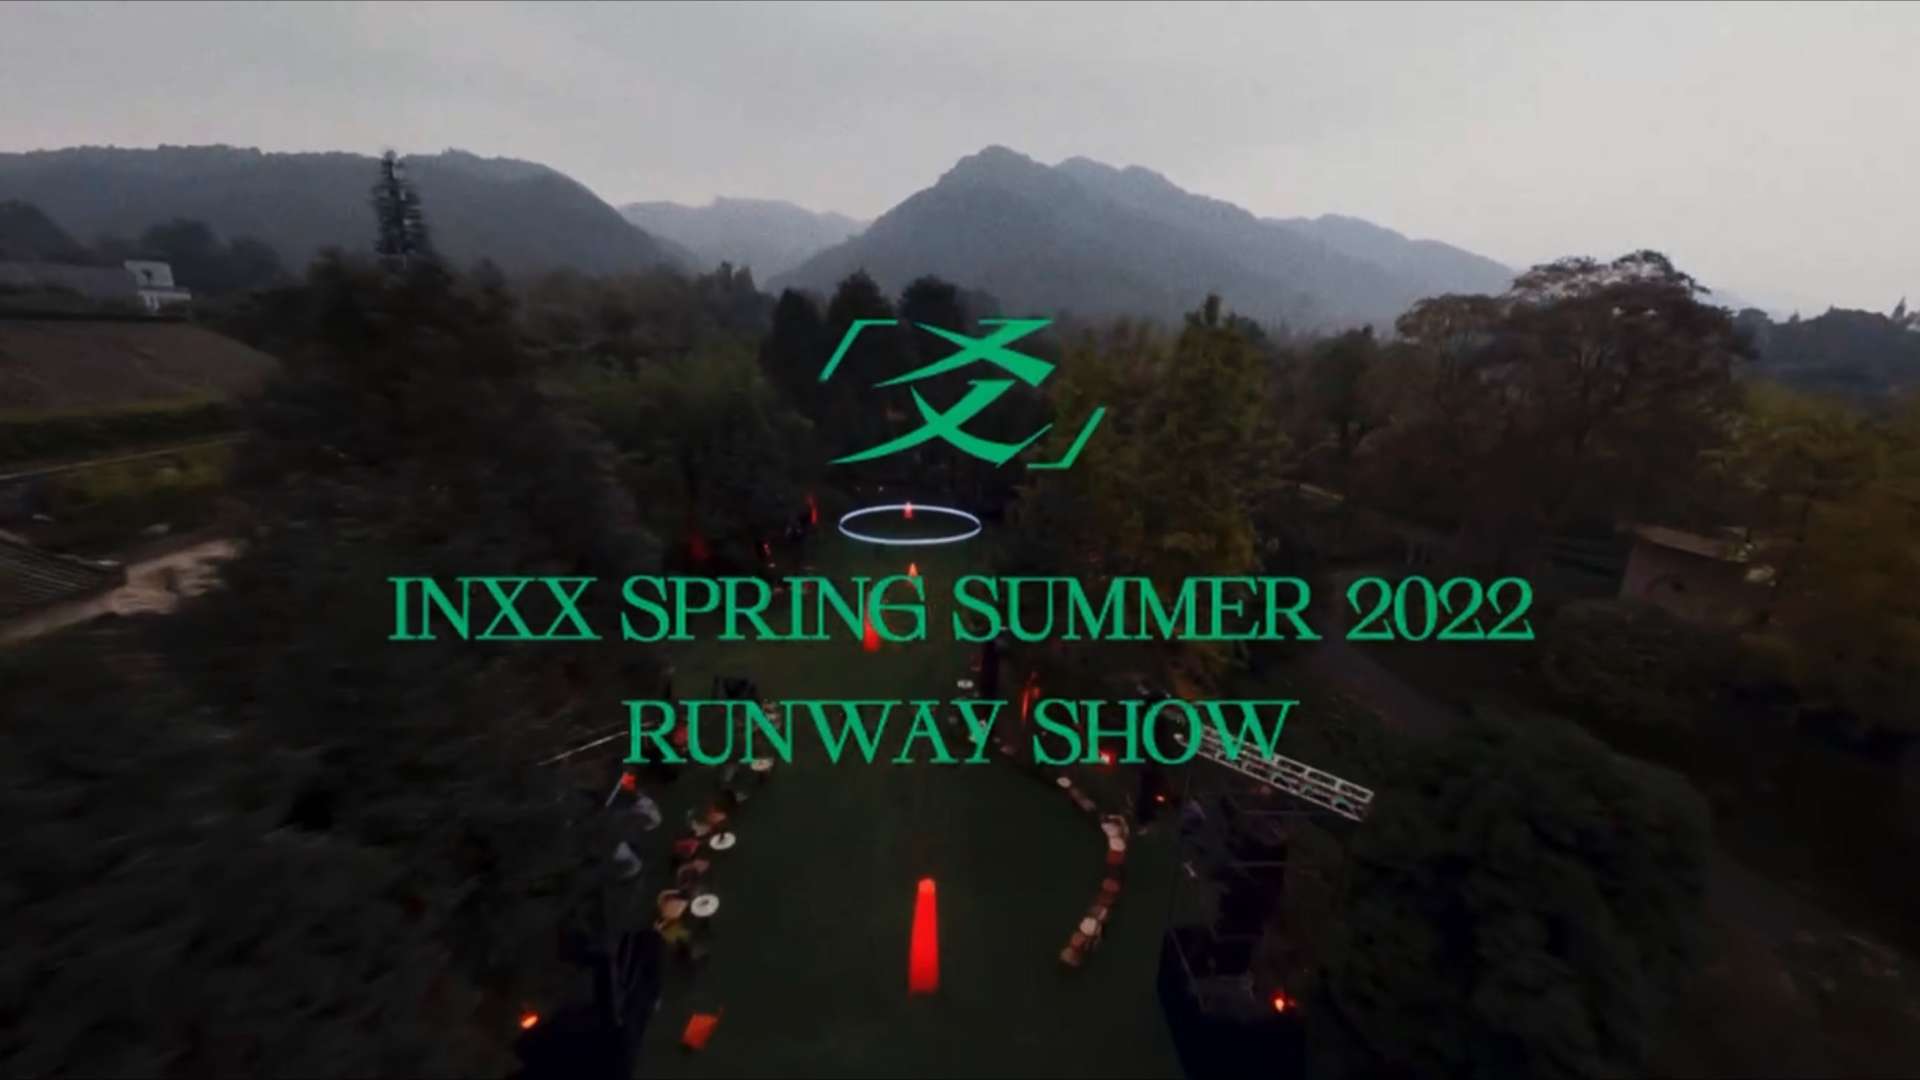 INXX SPRING SUMMER 2022 RUNWAY SHOW